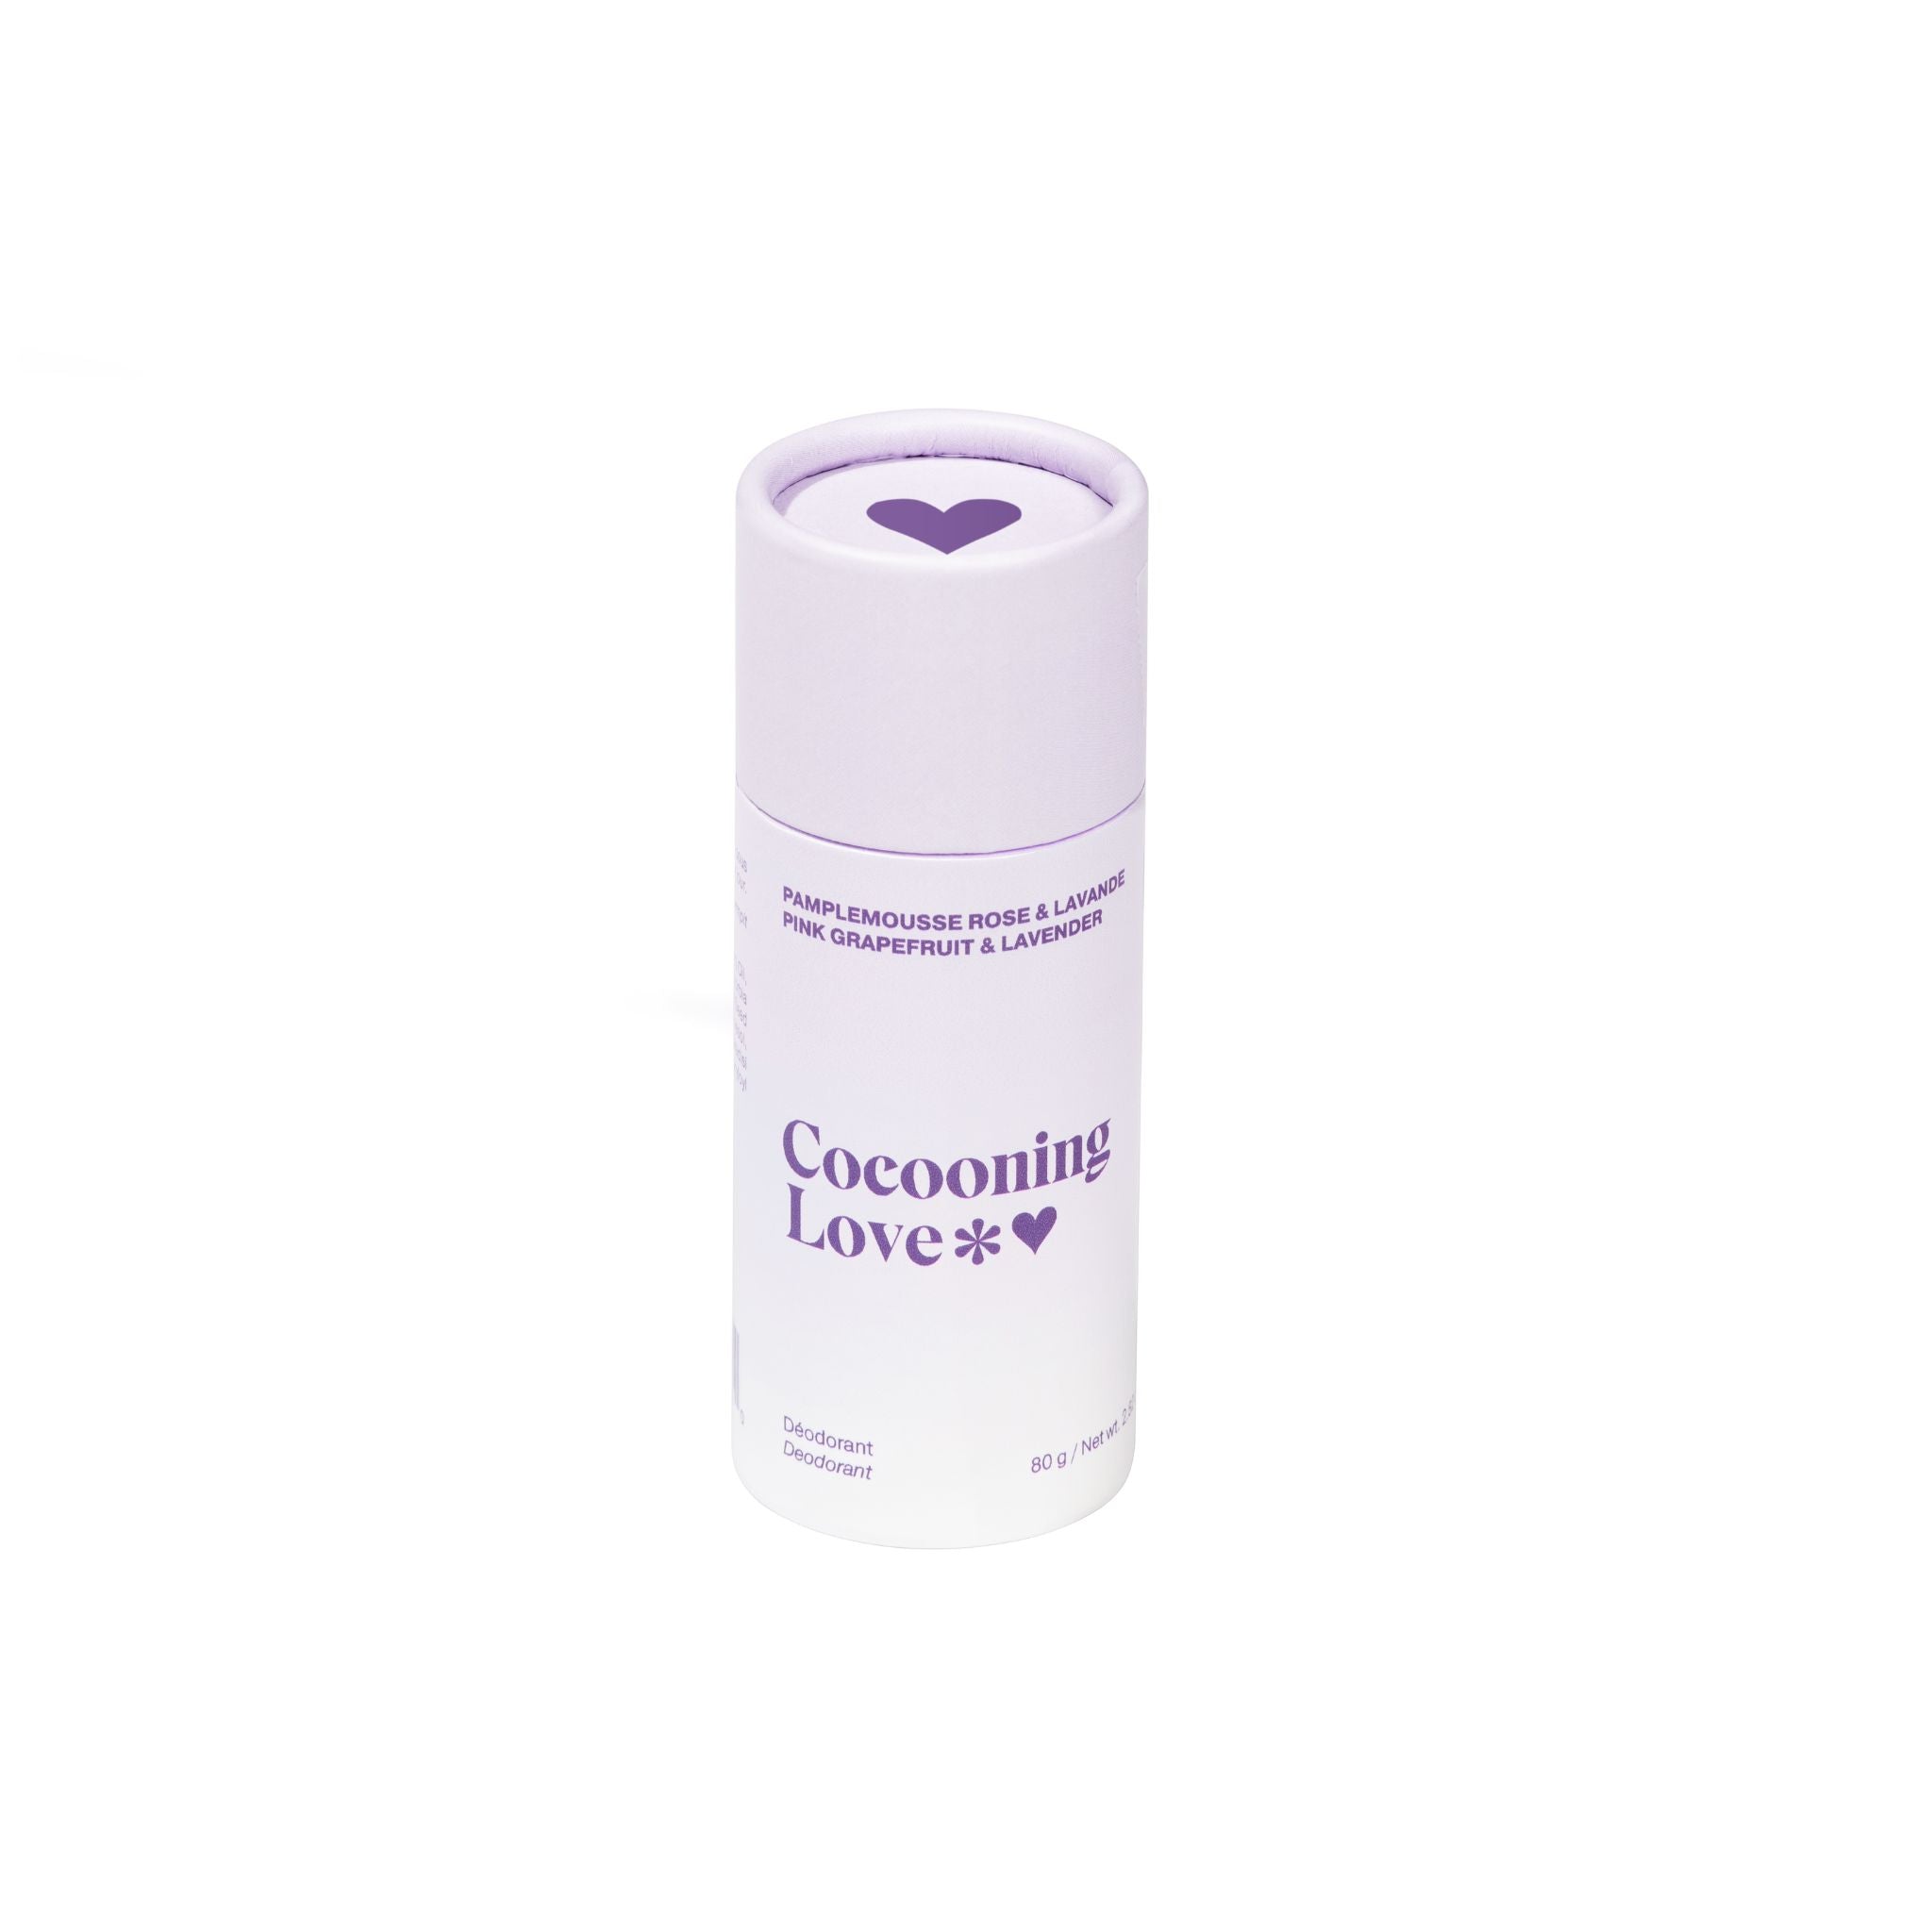 Cocooning Love. Deodorant Vegan Pamplemousse Rose et Lavande - 80 g - Concept C. Shop